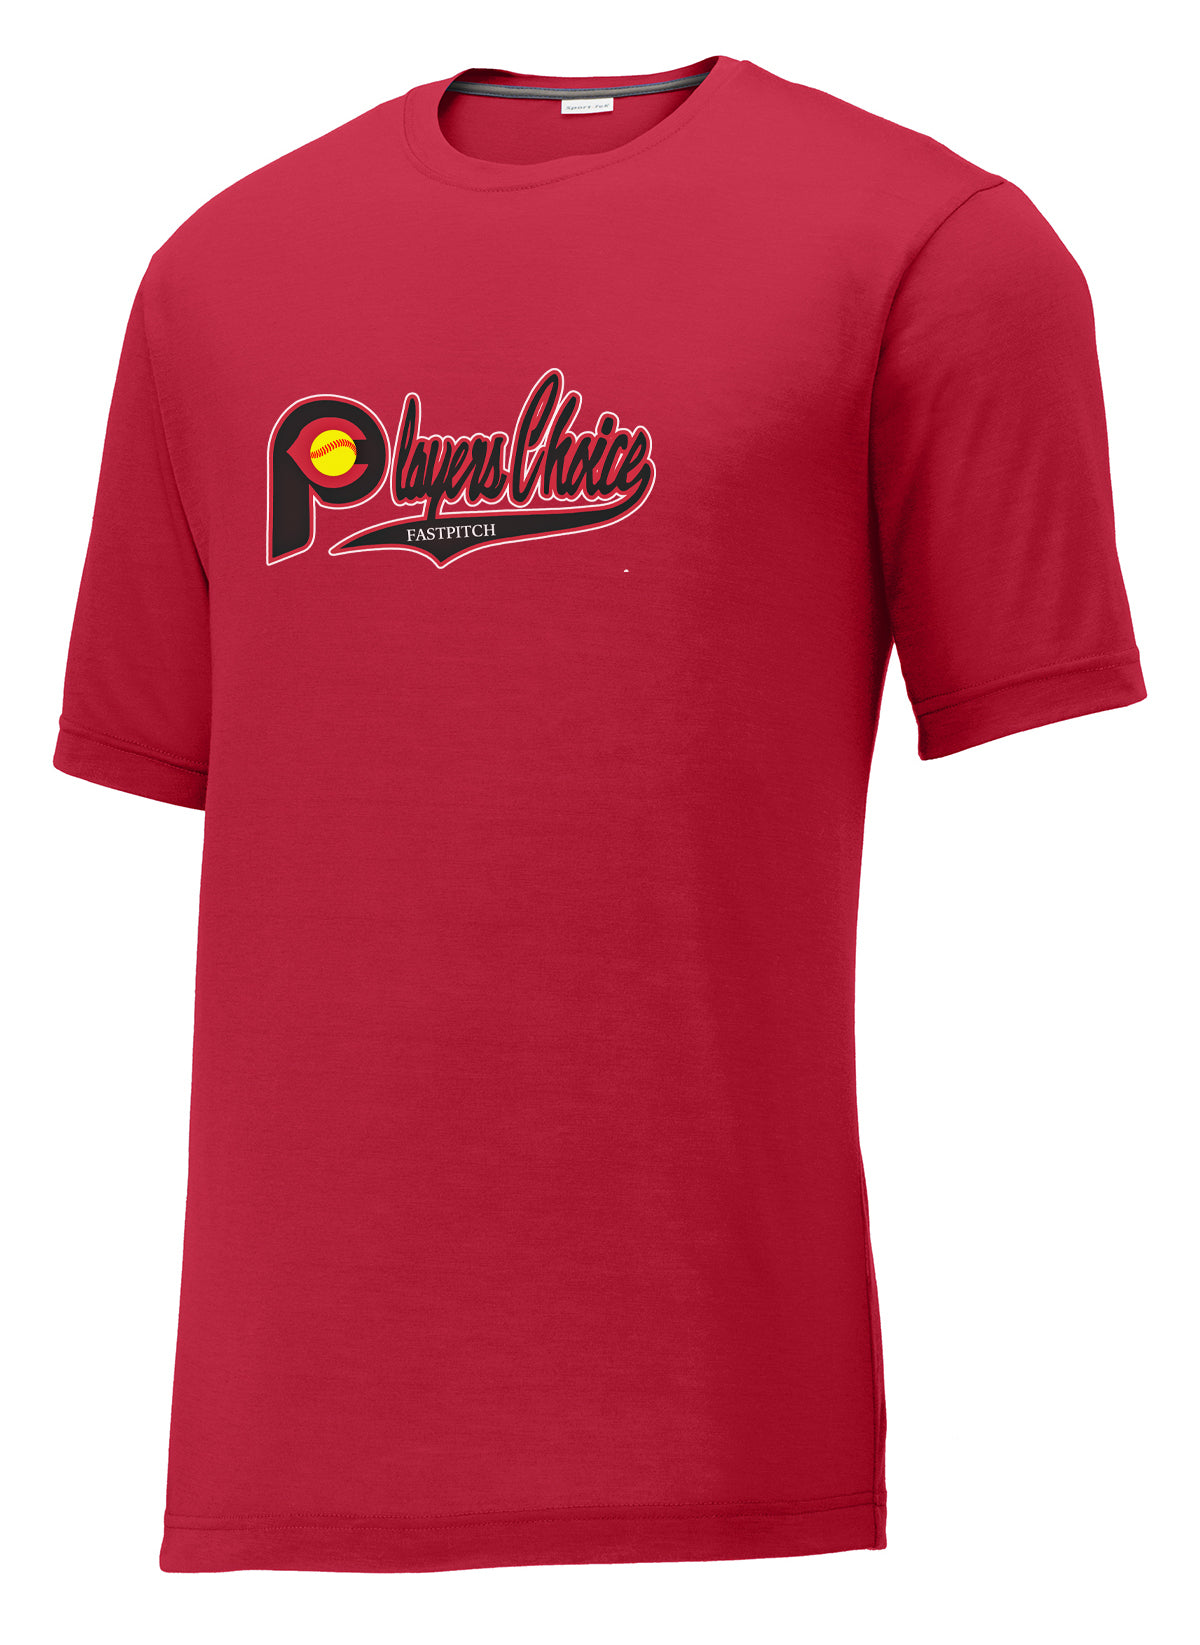 Player's Choice Academy Softball CottonTouch Performance T-Shirt